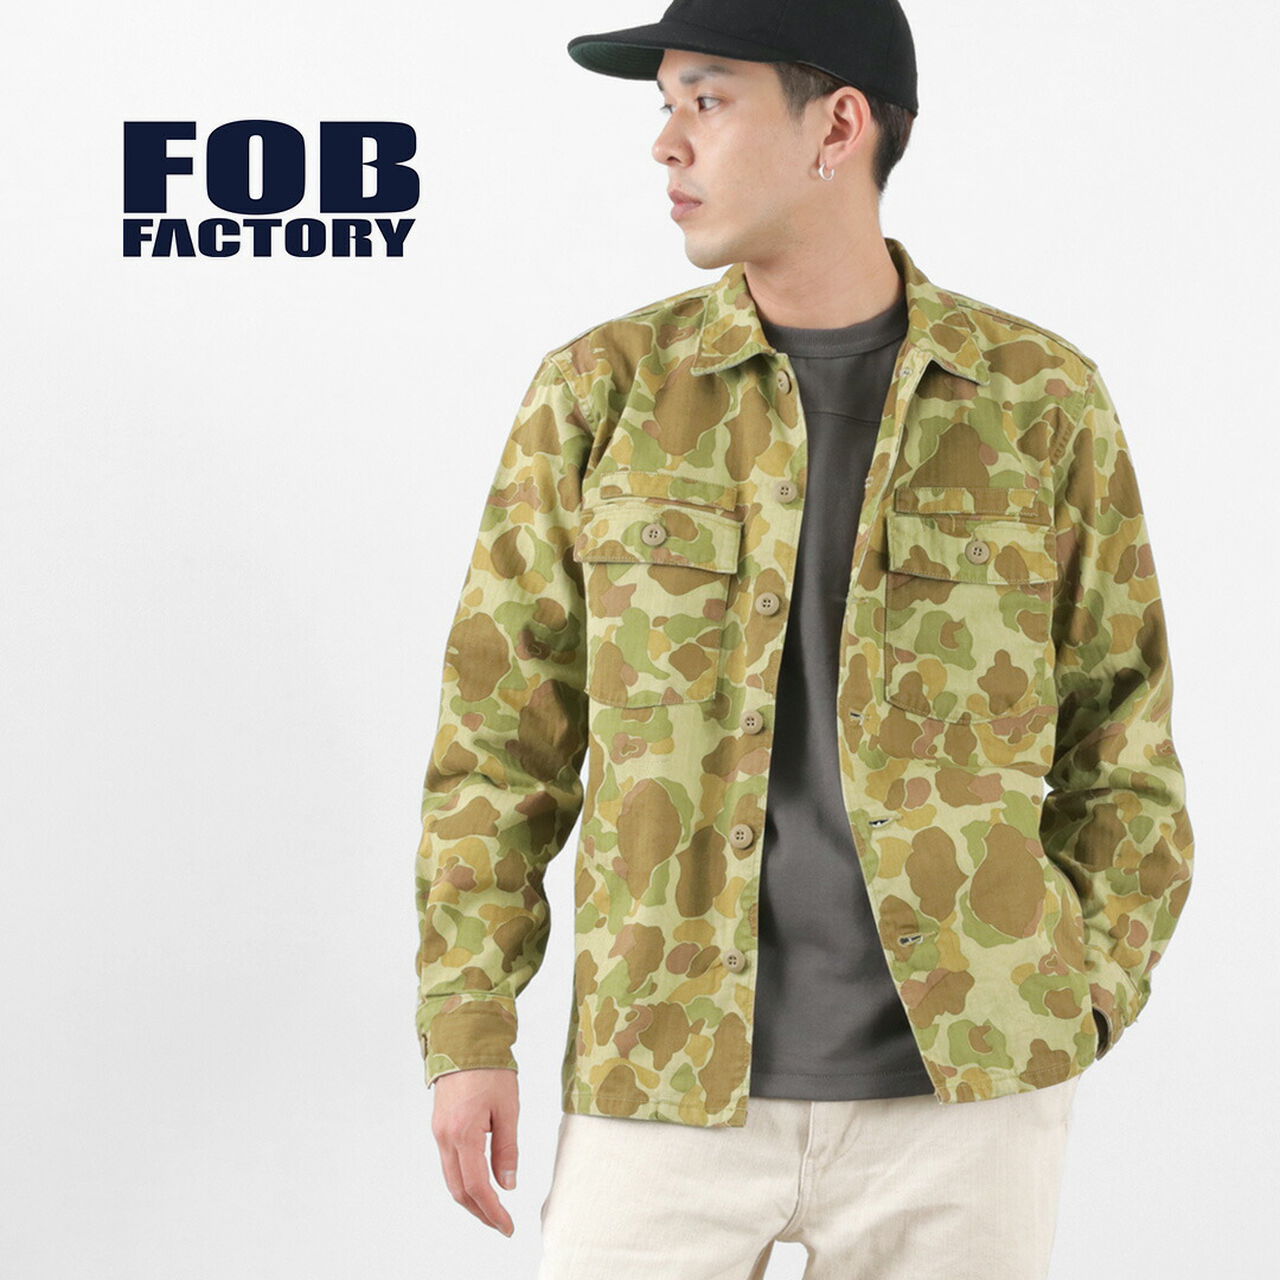 F2362 Fatigue shirt jacket camo